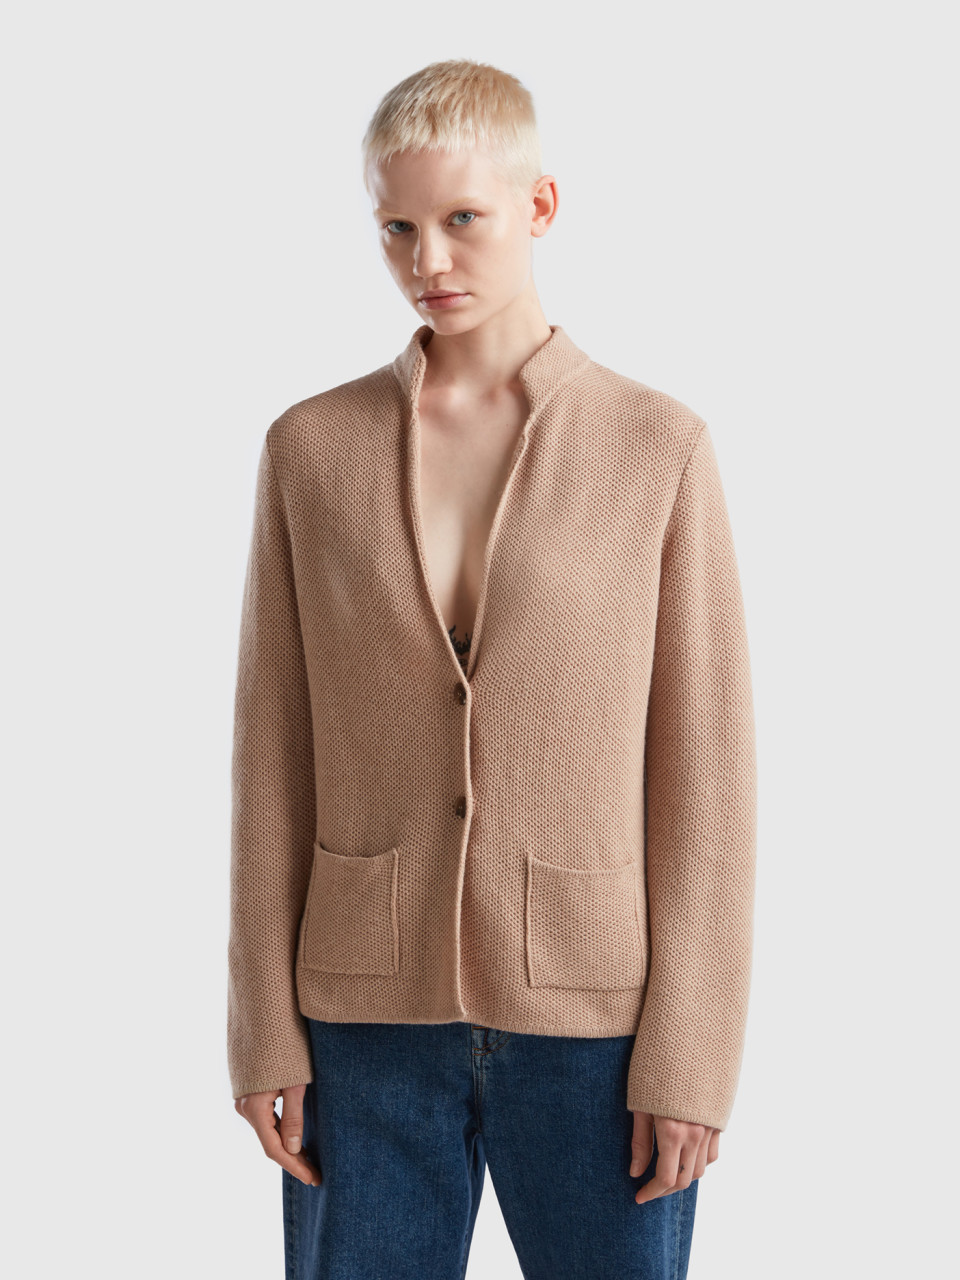 Benetton, Knit Jacket In Wool And Cashmere Blend, Beige, Women